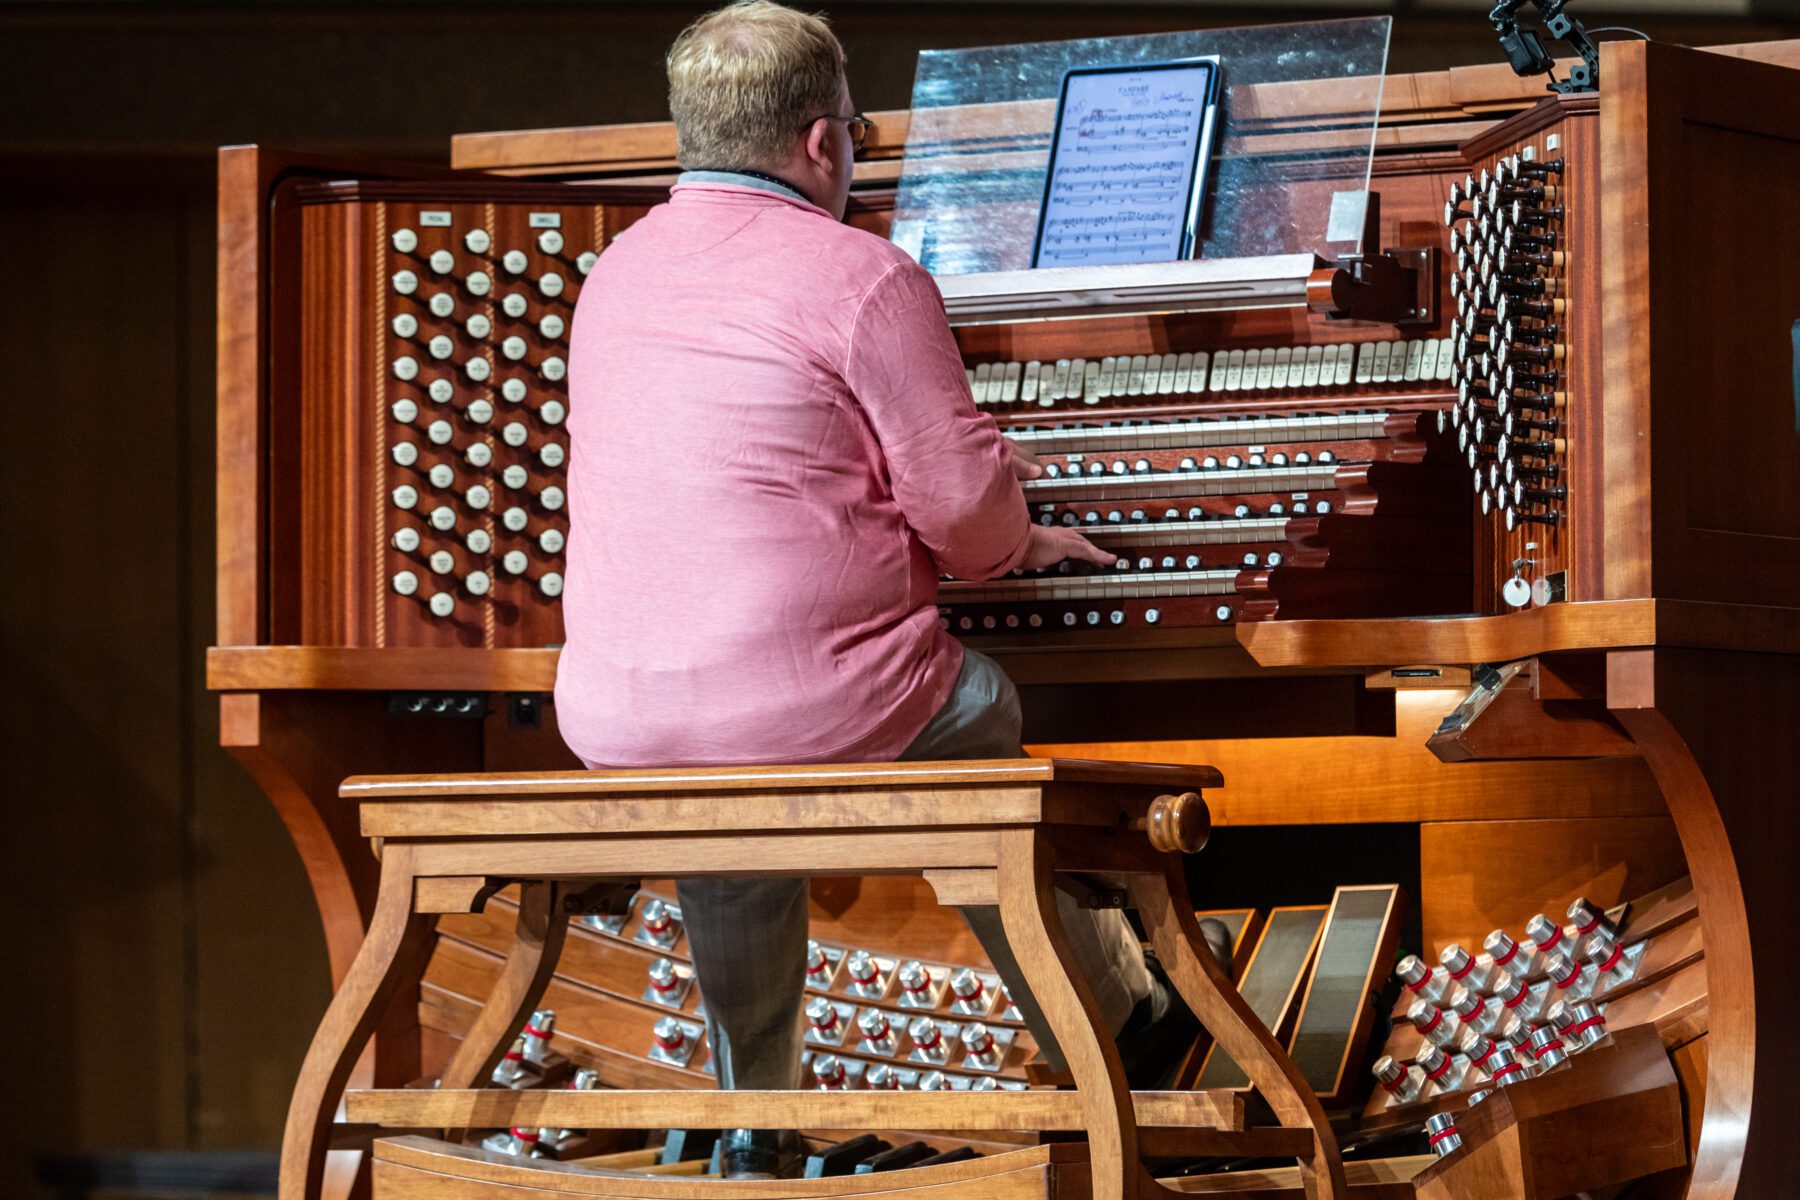 A close up shot of the organ player.